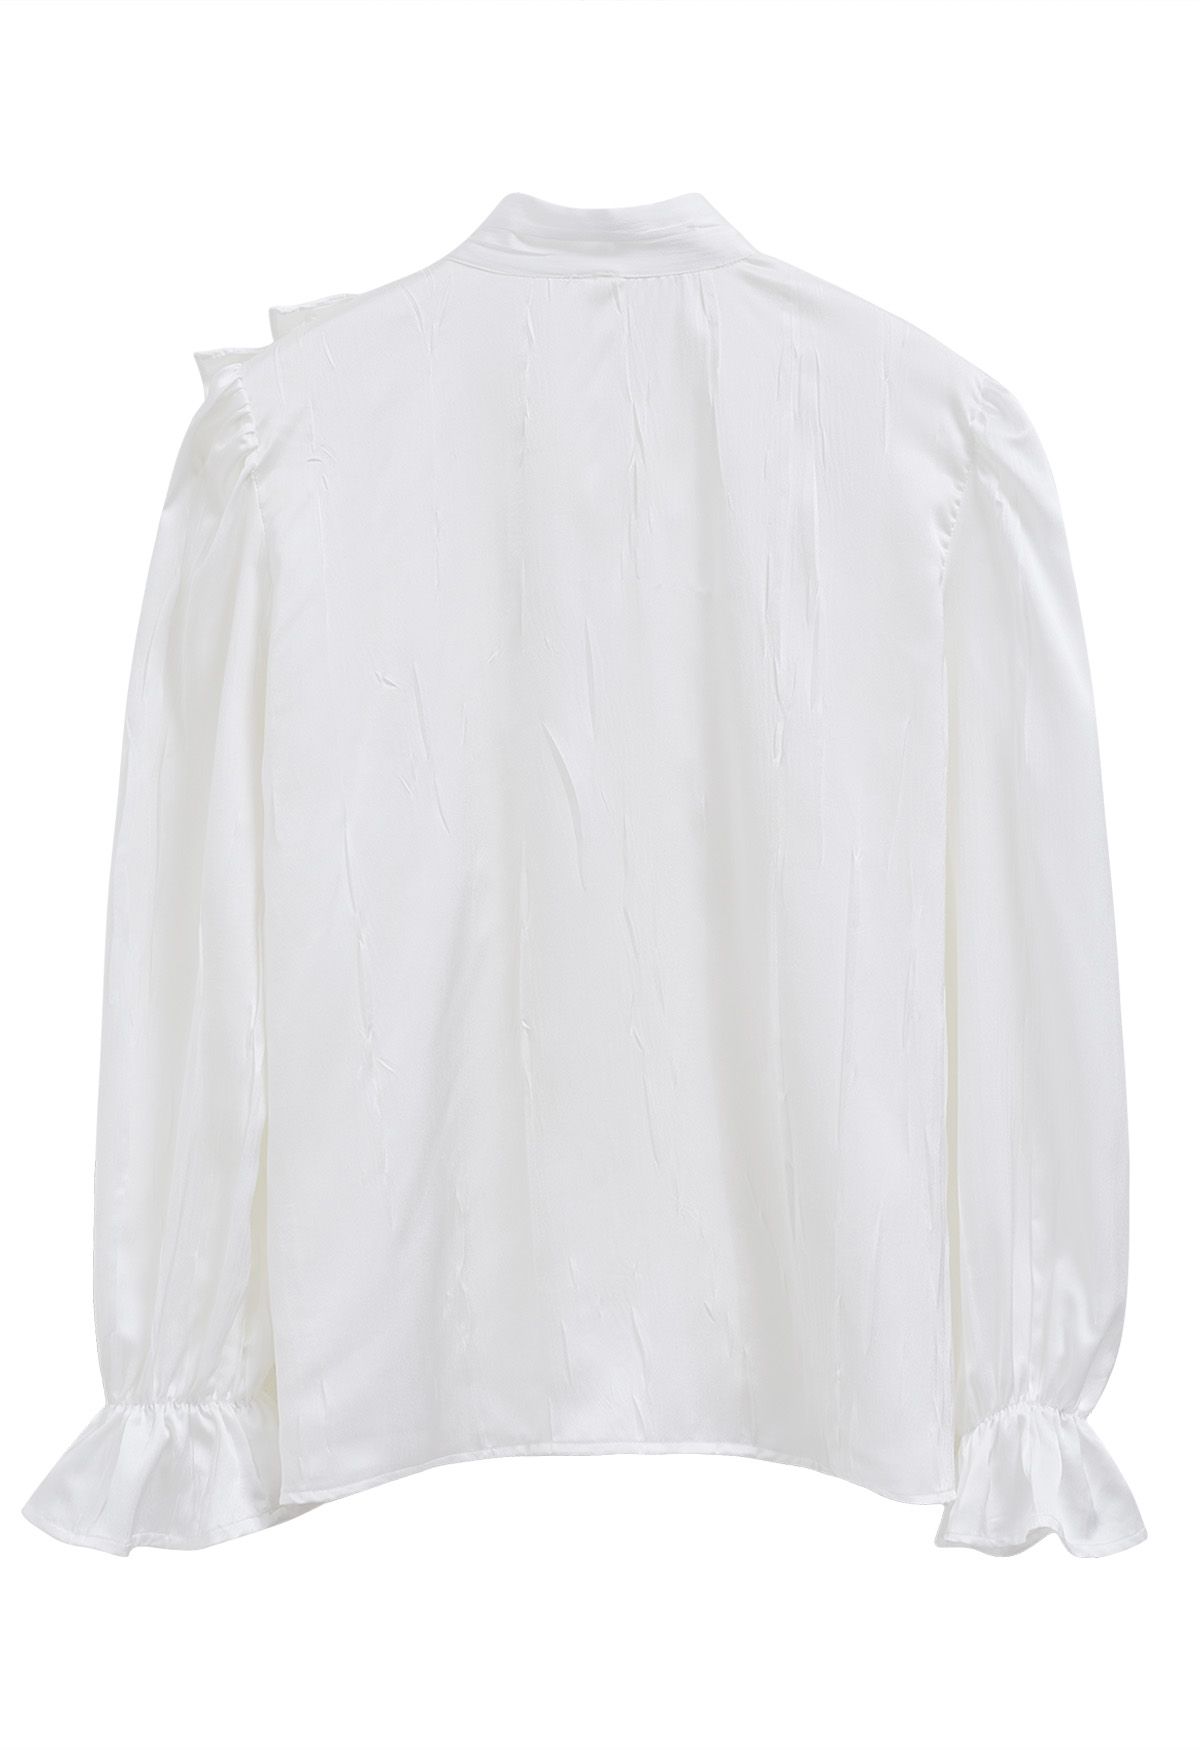 Tie-Neck Ruffle Trim Satin Shirt in White - Retro, Indie and Unique Fashion